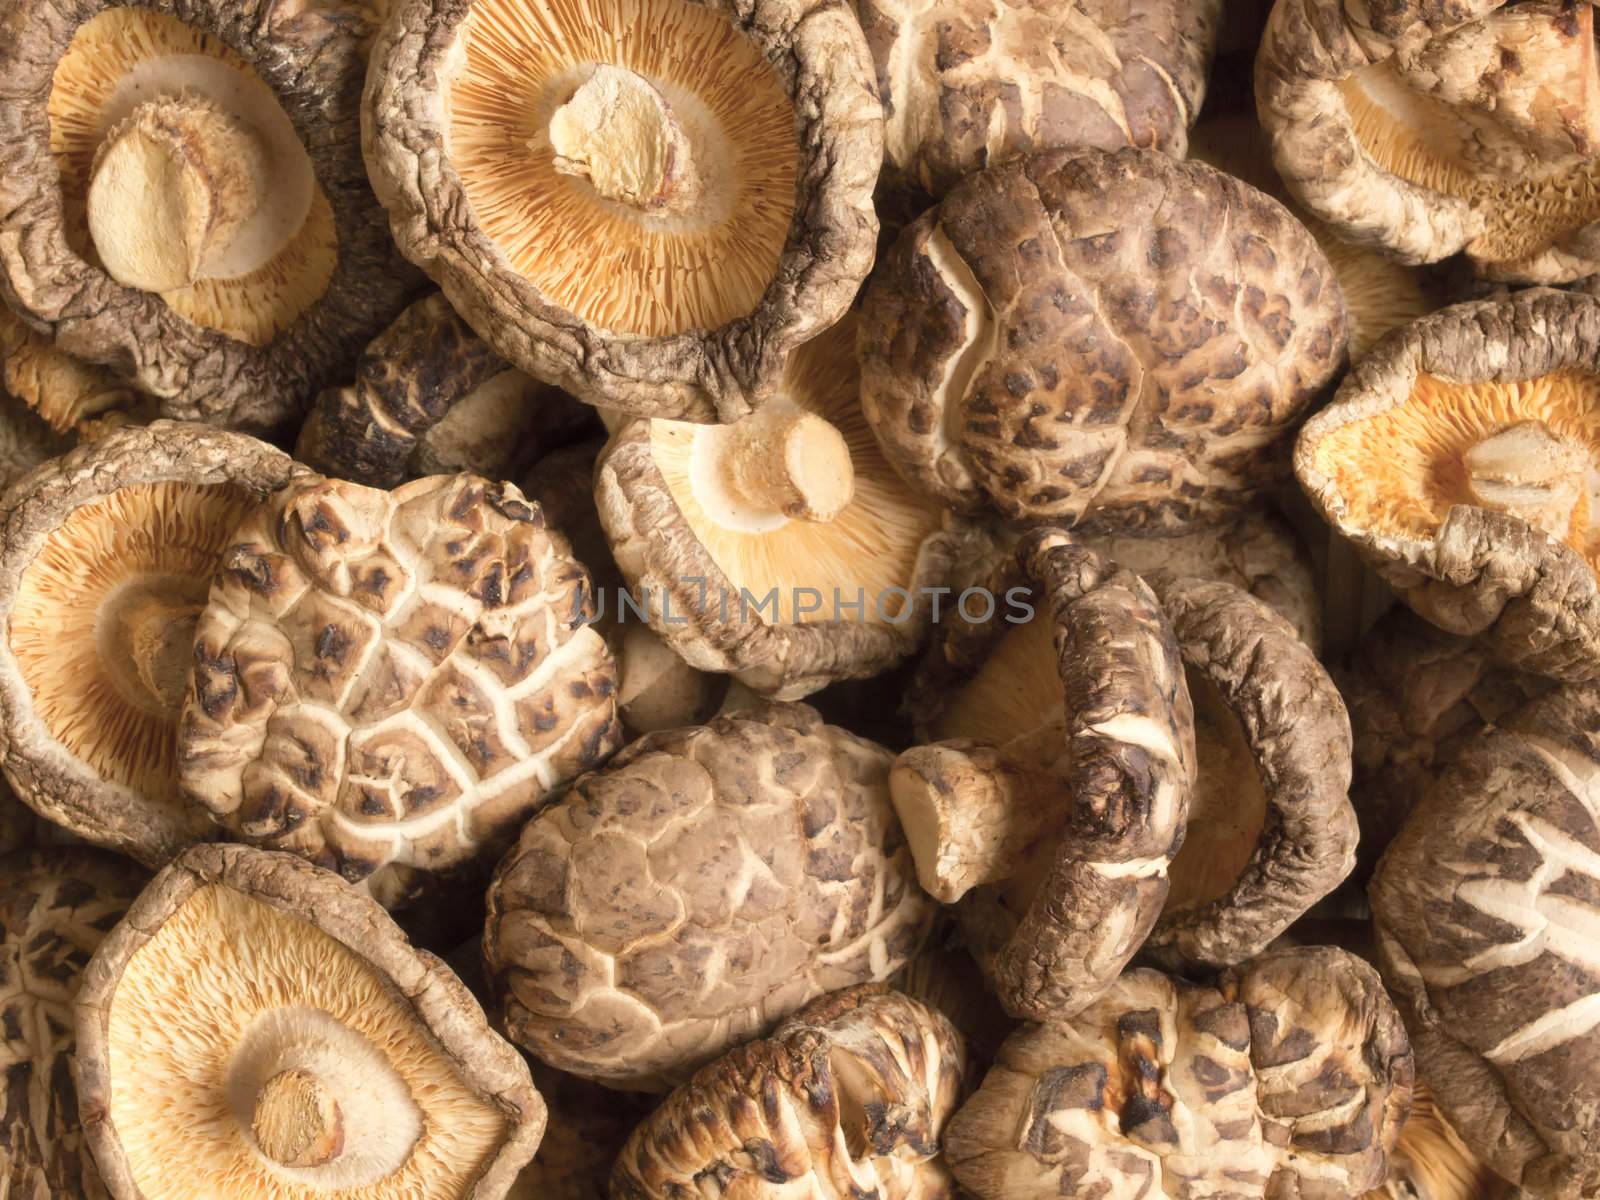 close up of dried shitake mushrooms food background